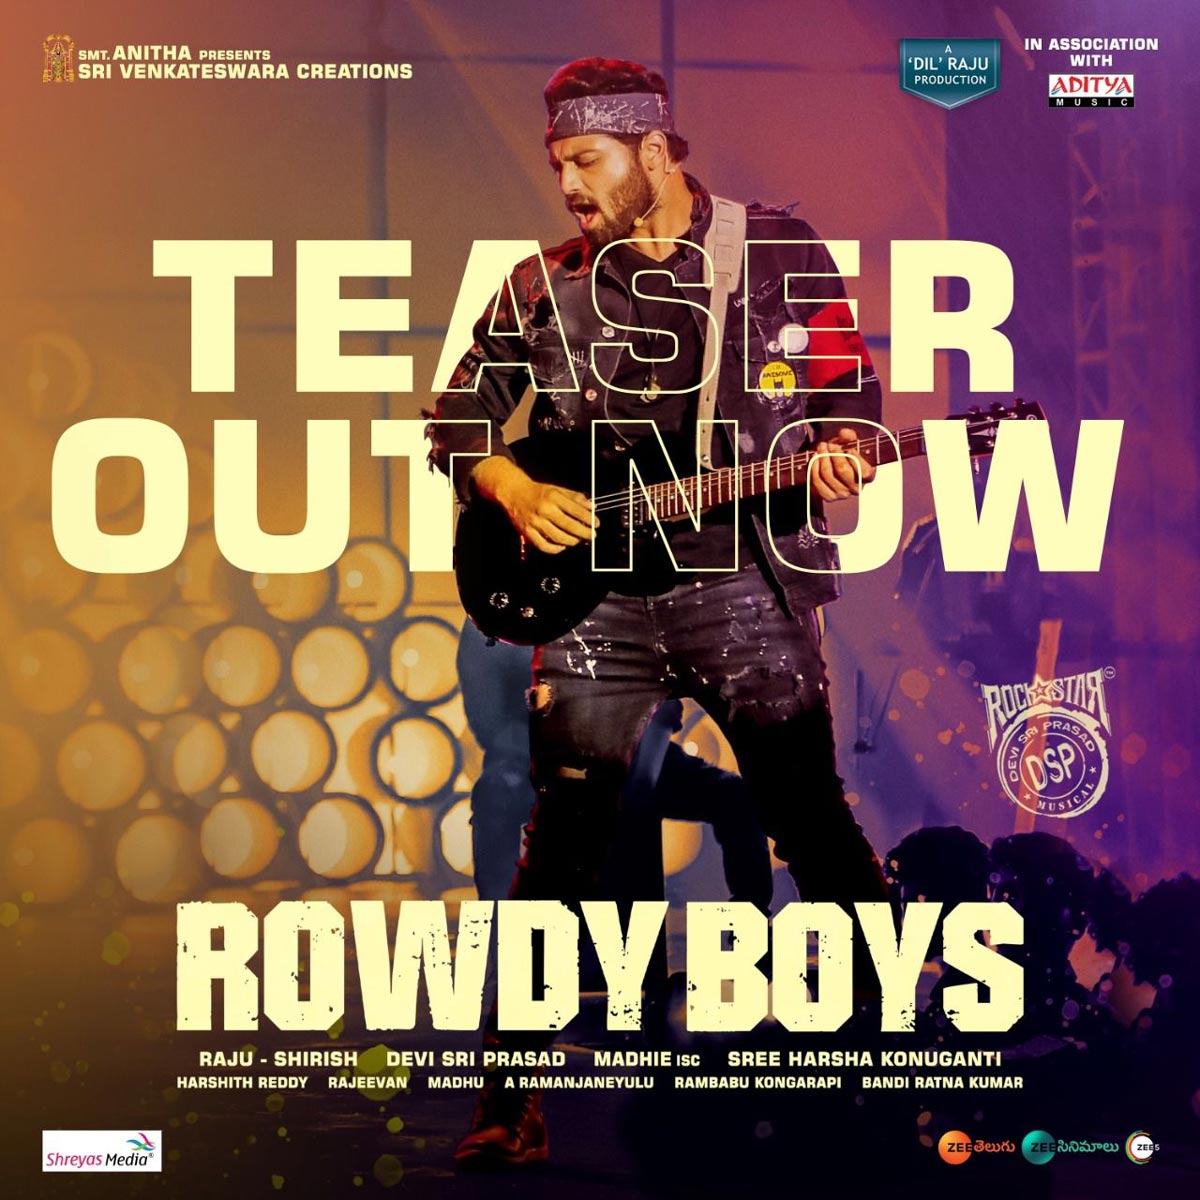 Rowdy Boys teaser released